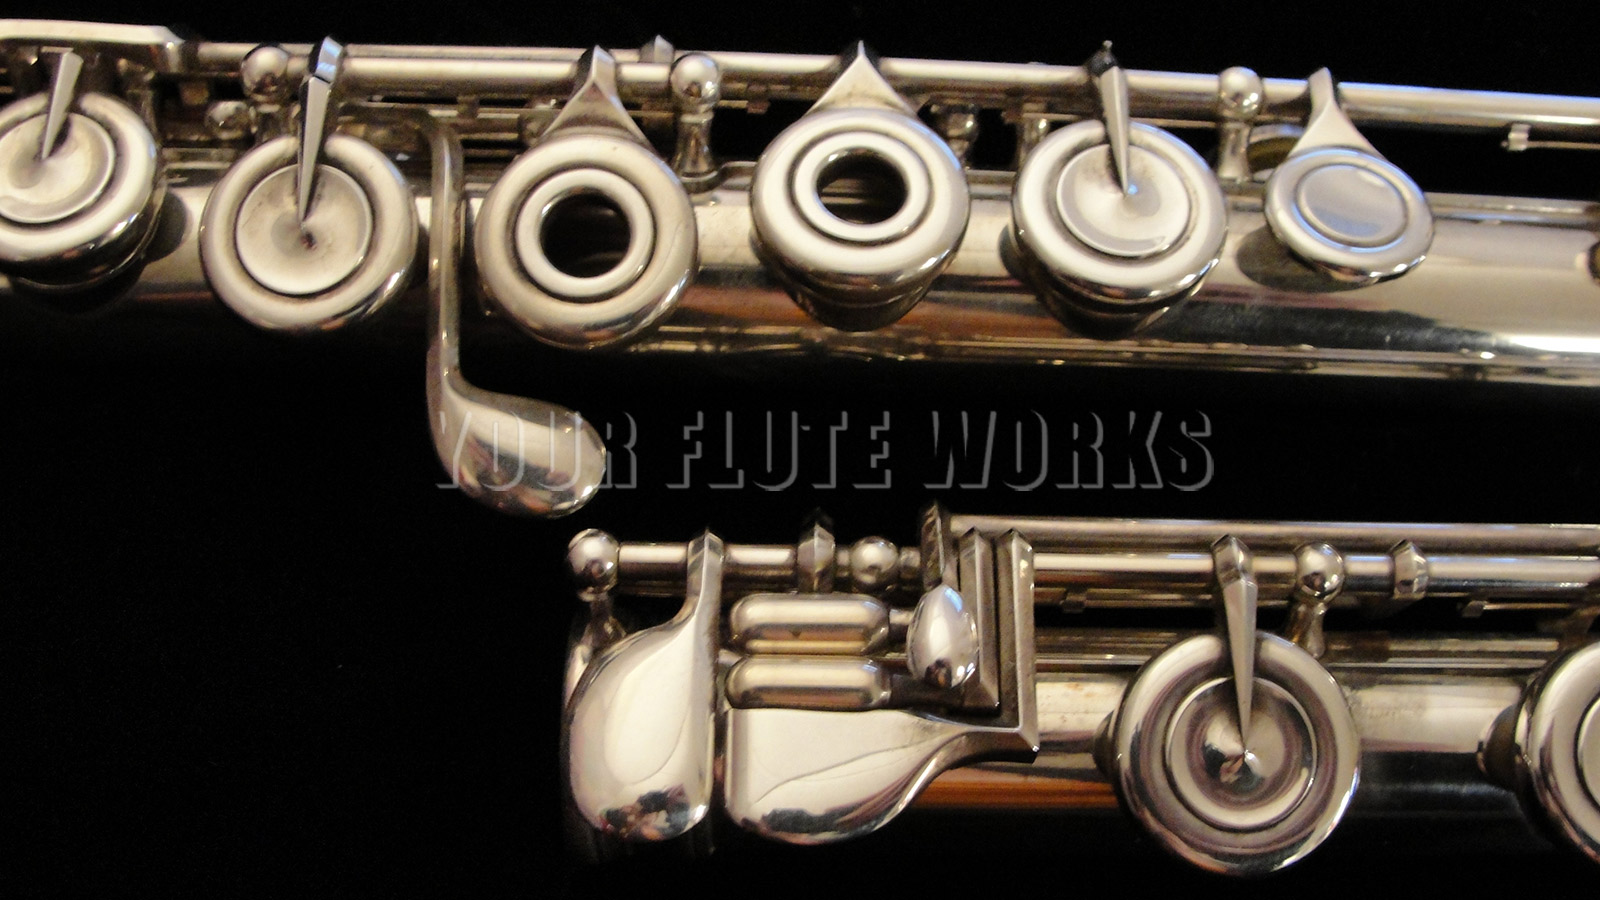 Verne Q. Powell Handmade Silver Flute #13402